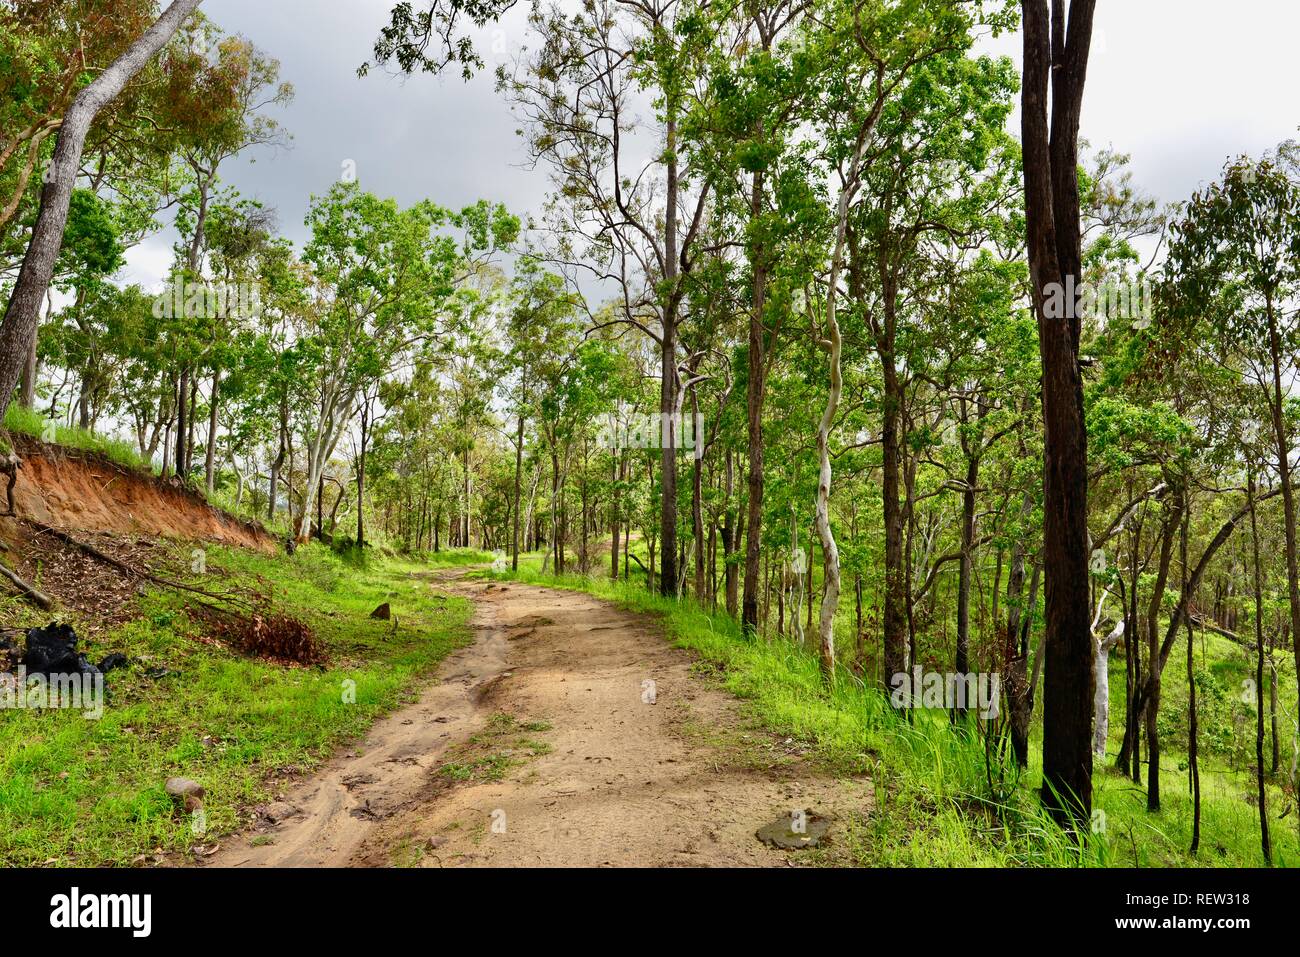 The fire access track in Mia Mia State Forest, Queensland, Australia Stock Photo